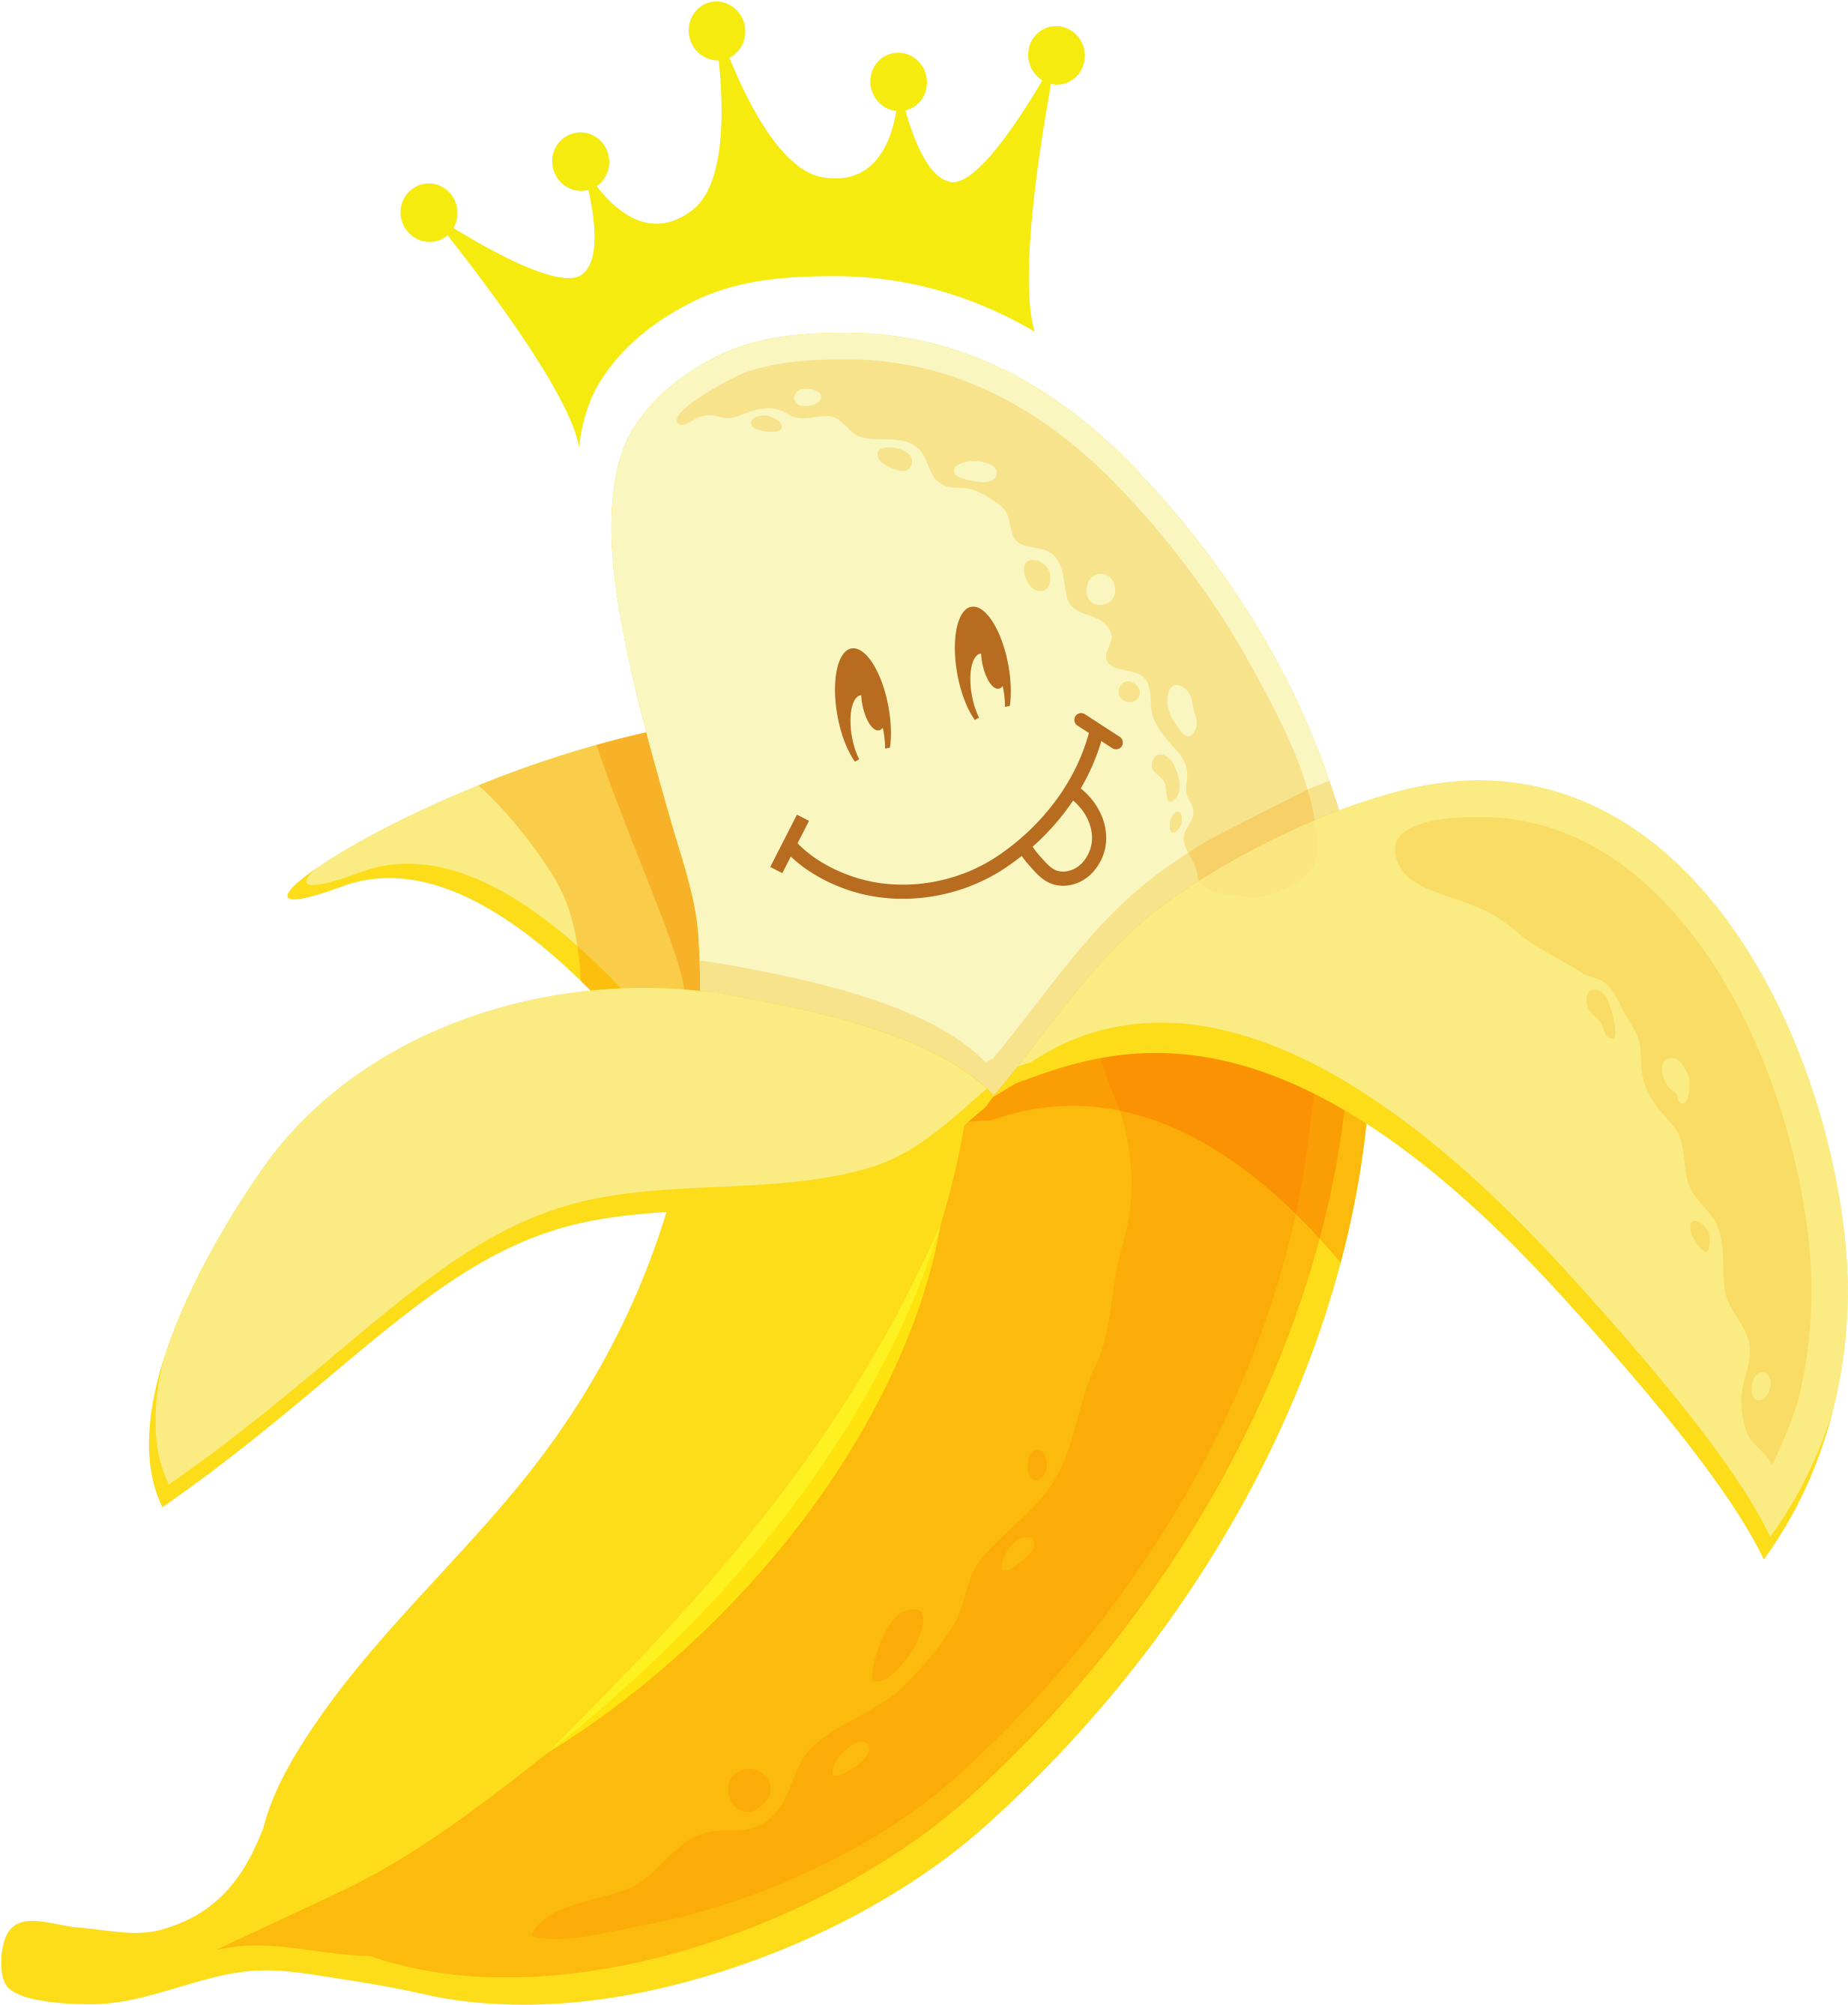 It's Banana Magic Peel Back The Banana To Reveal A - Banana Icon (2480x2681)